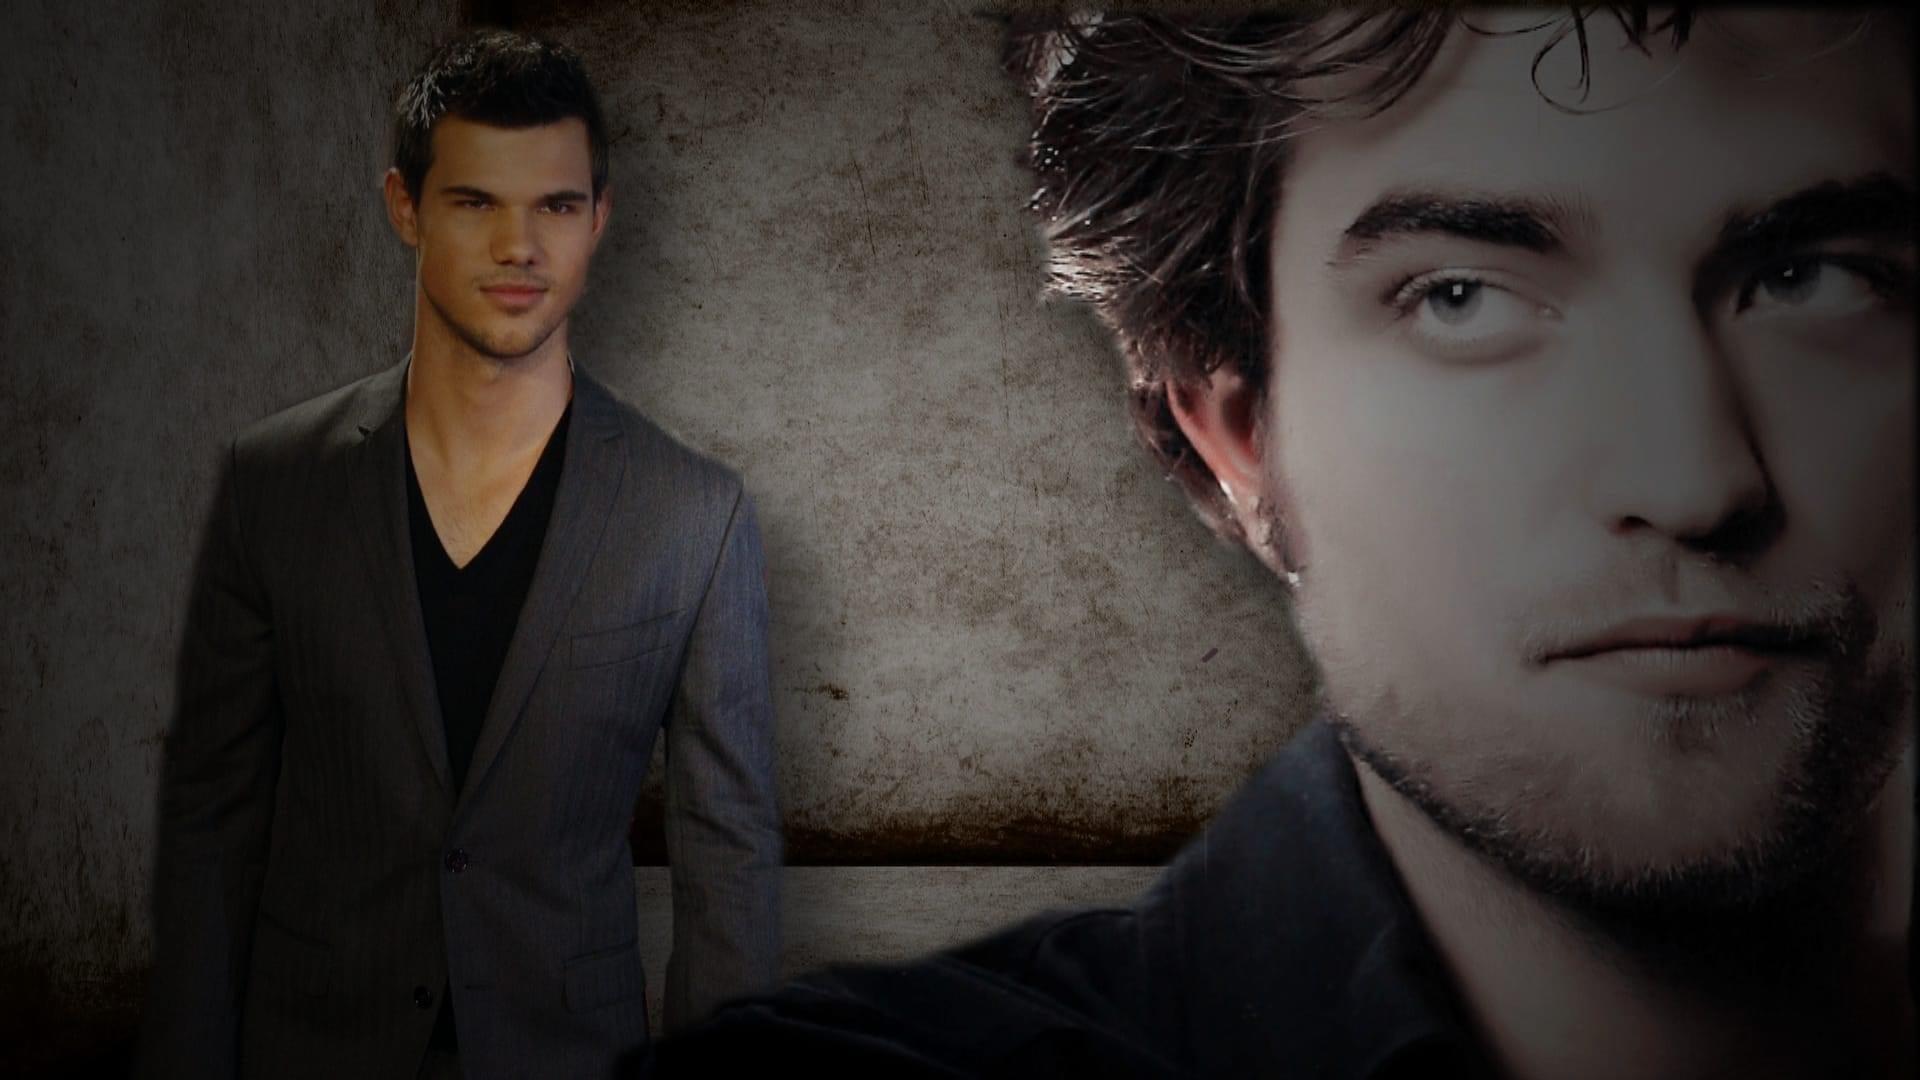 Twilight: The Robert Pattinson and Taylor Lautner Saga backdrop